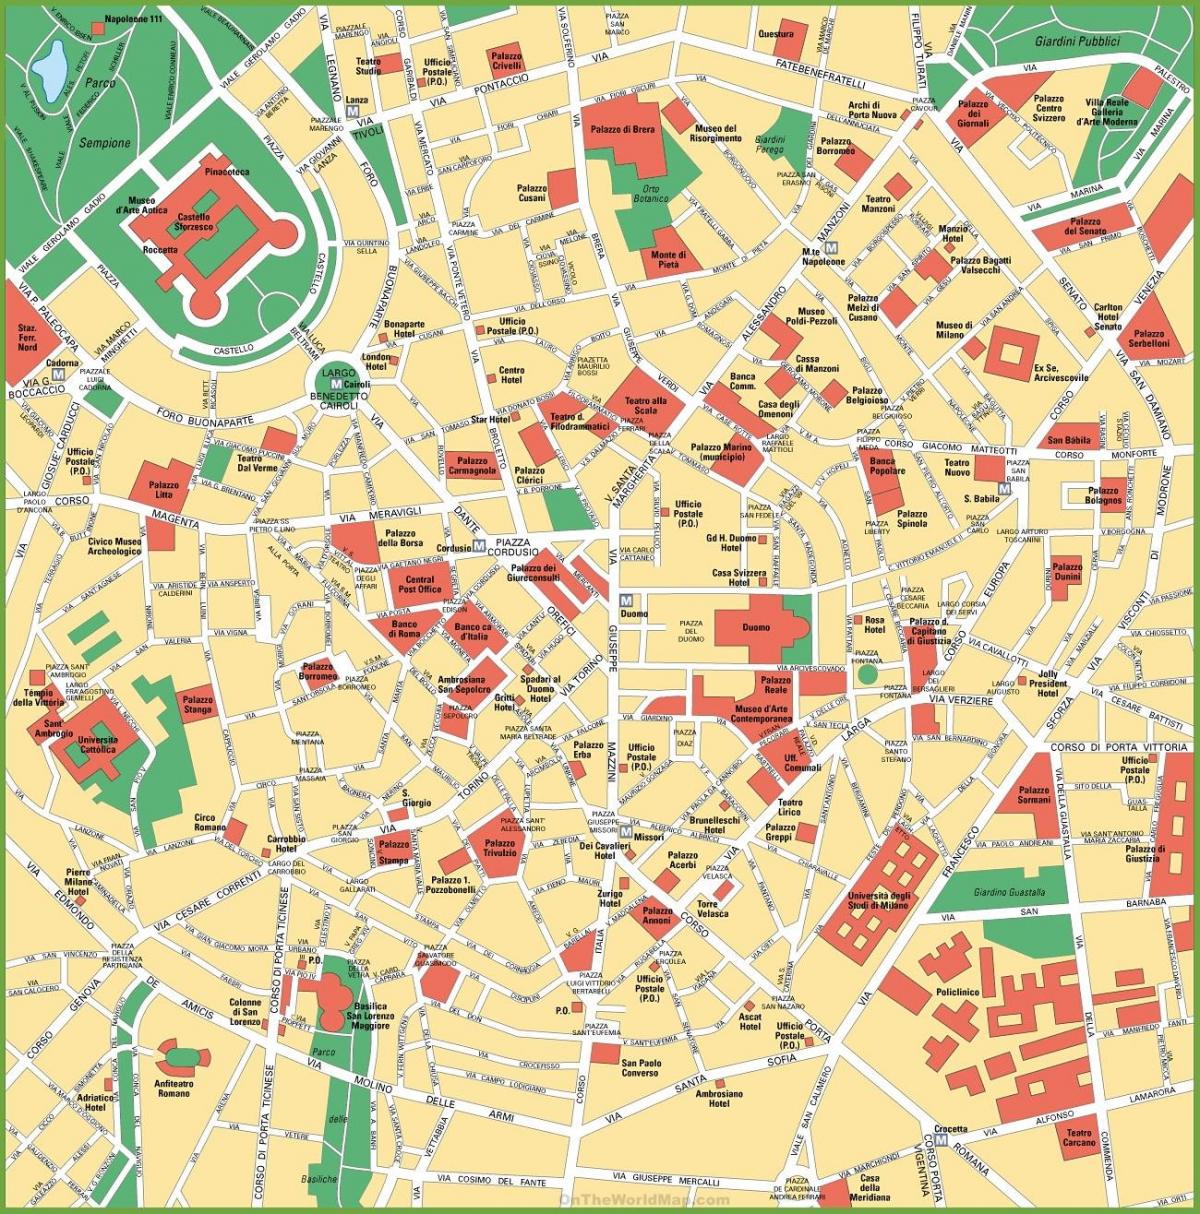 milano city center map